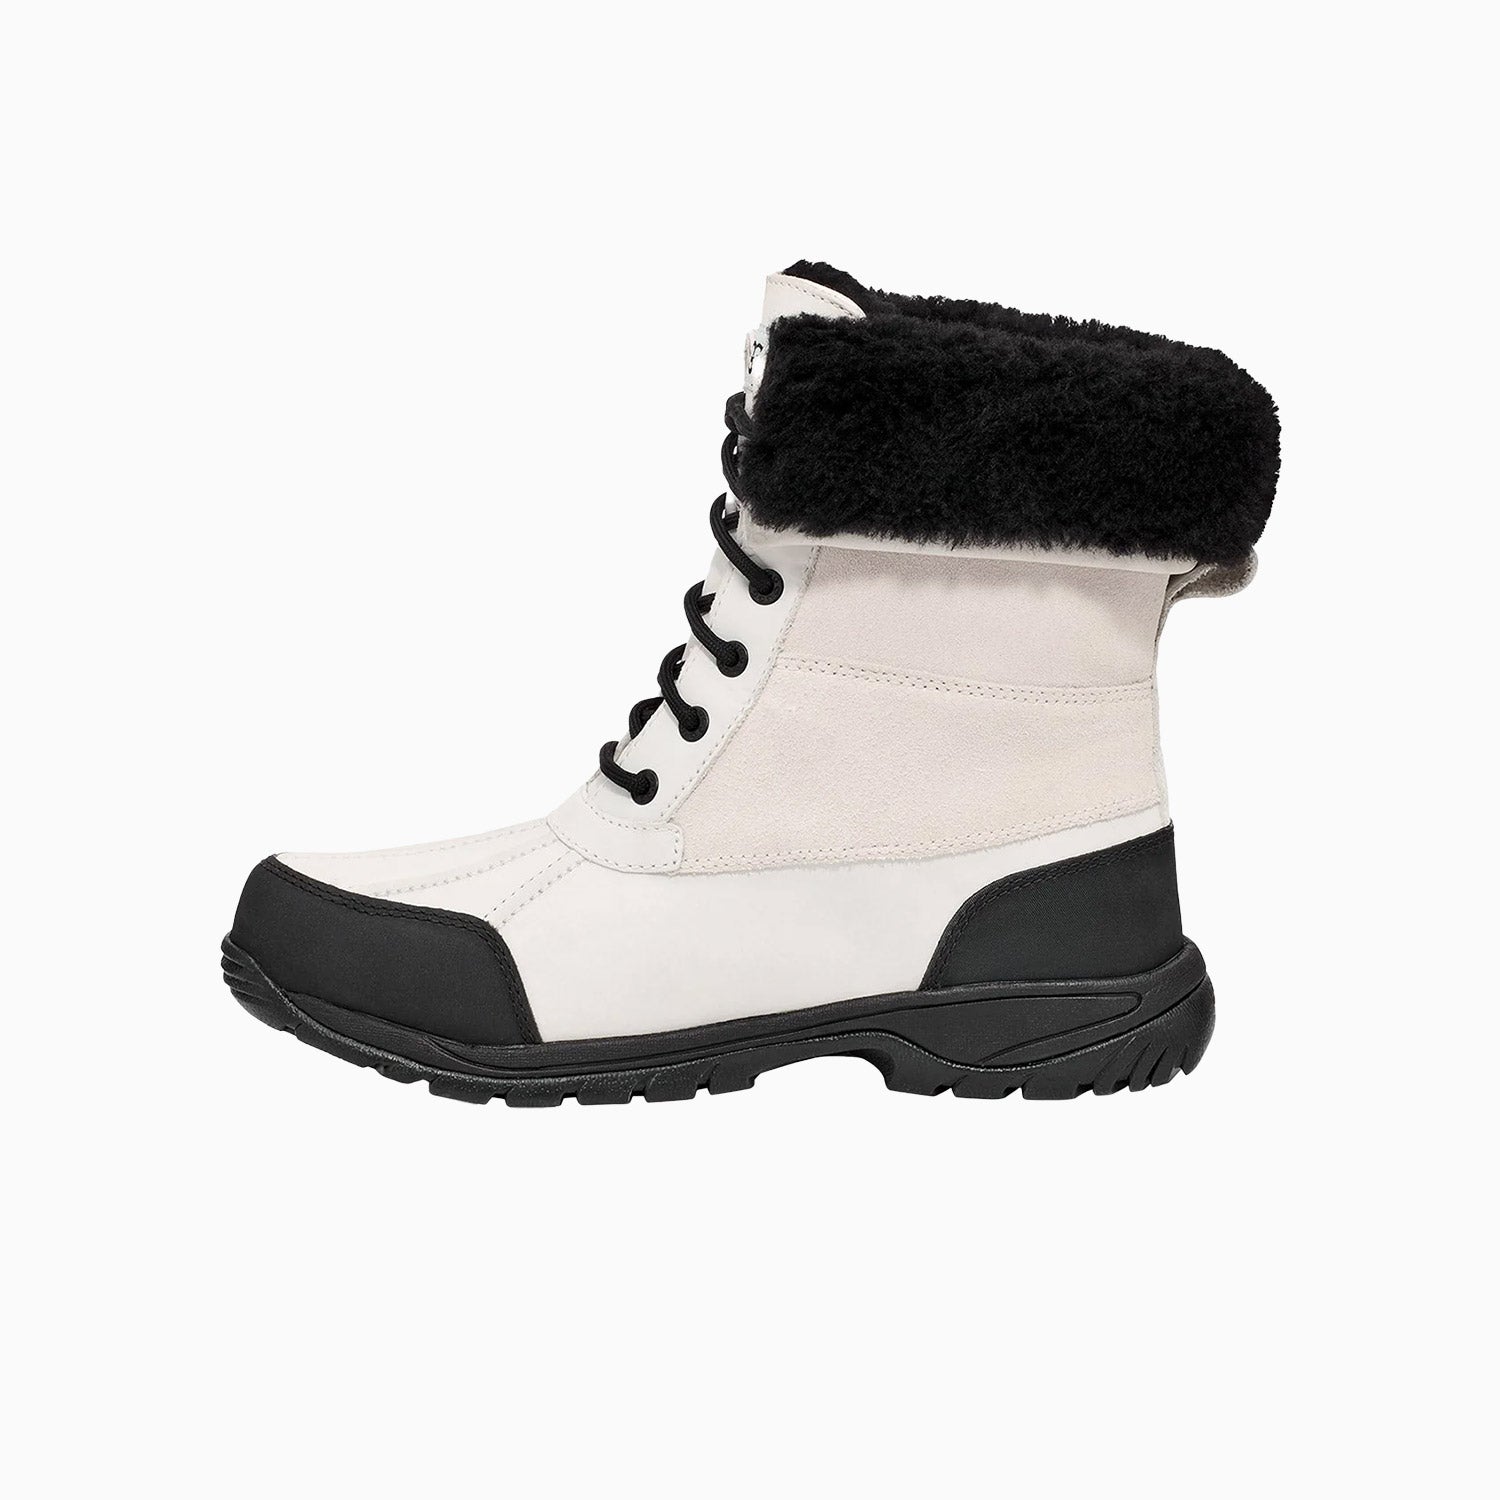 Men's Butte Waterproof Leather Snow Boot